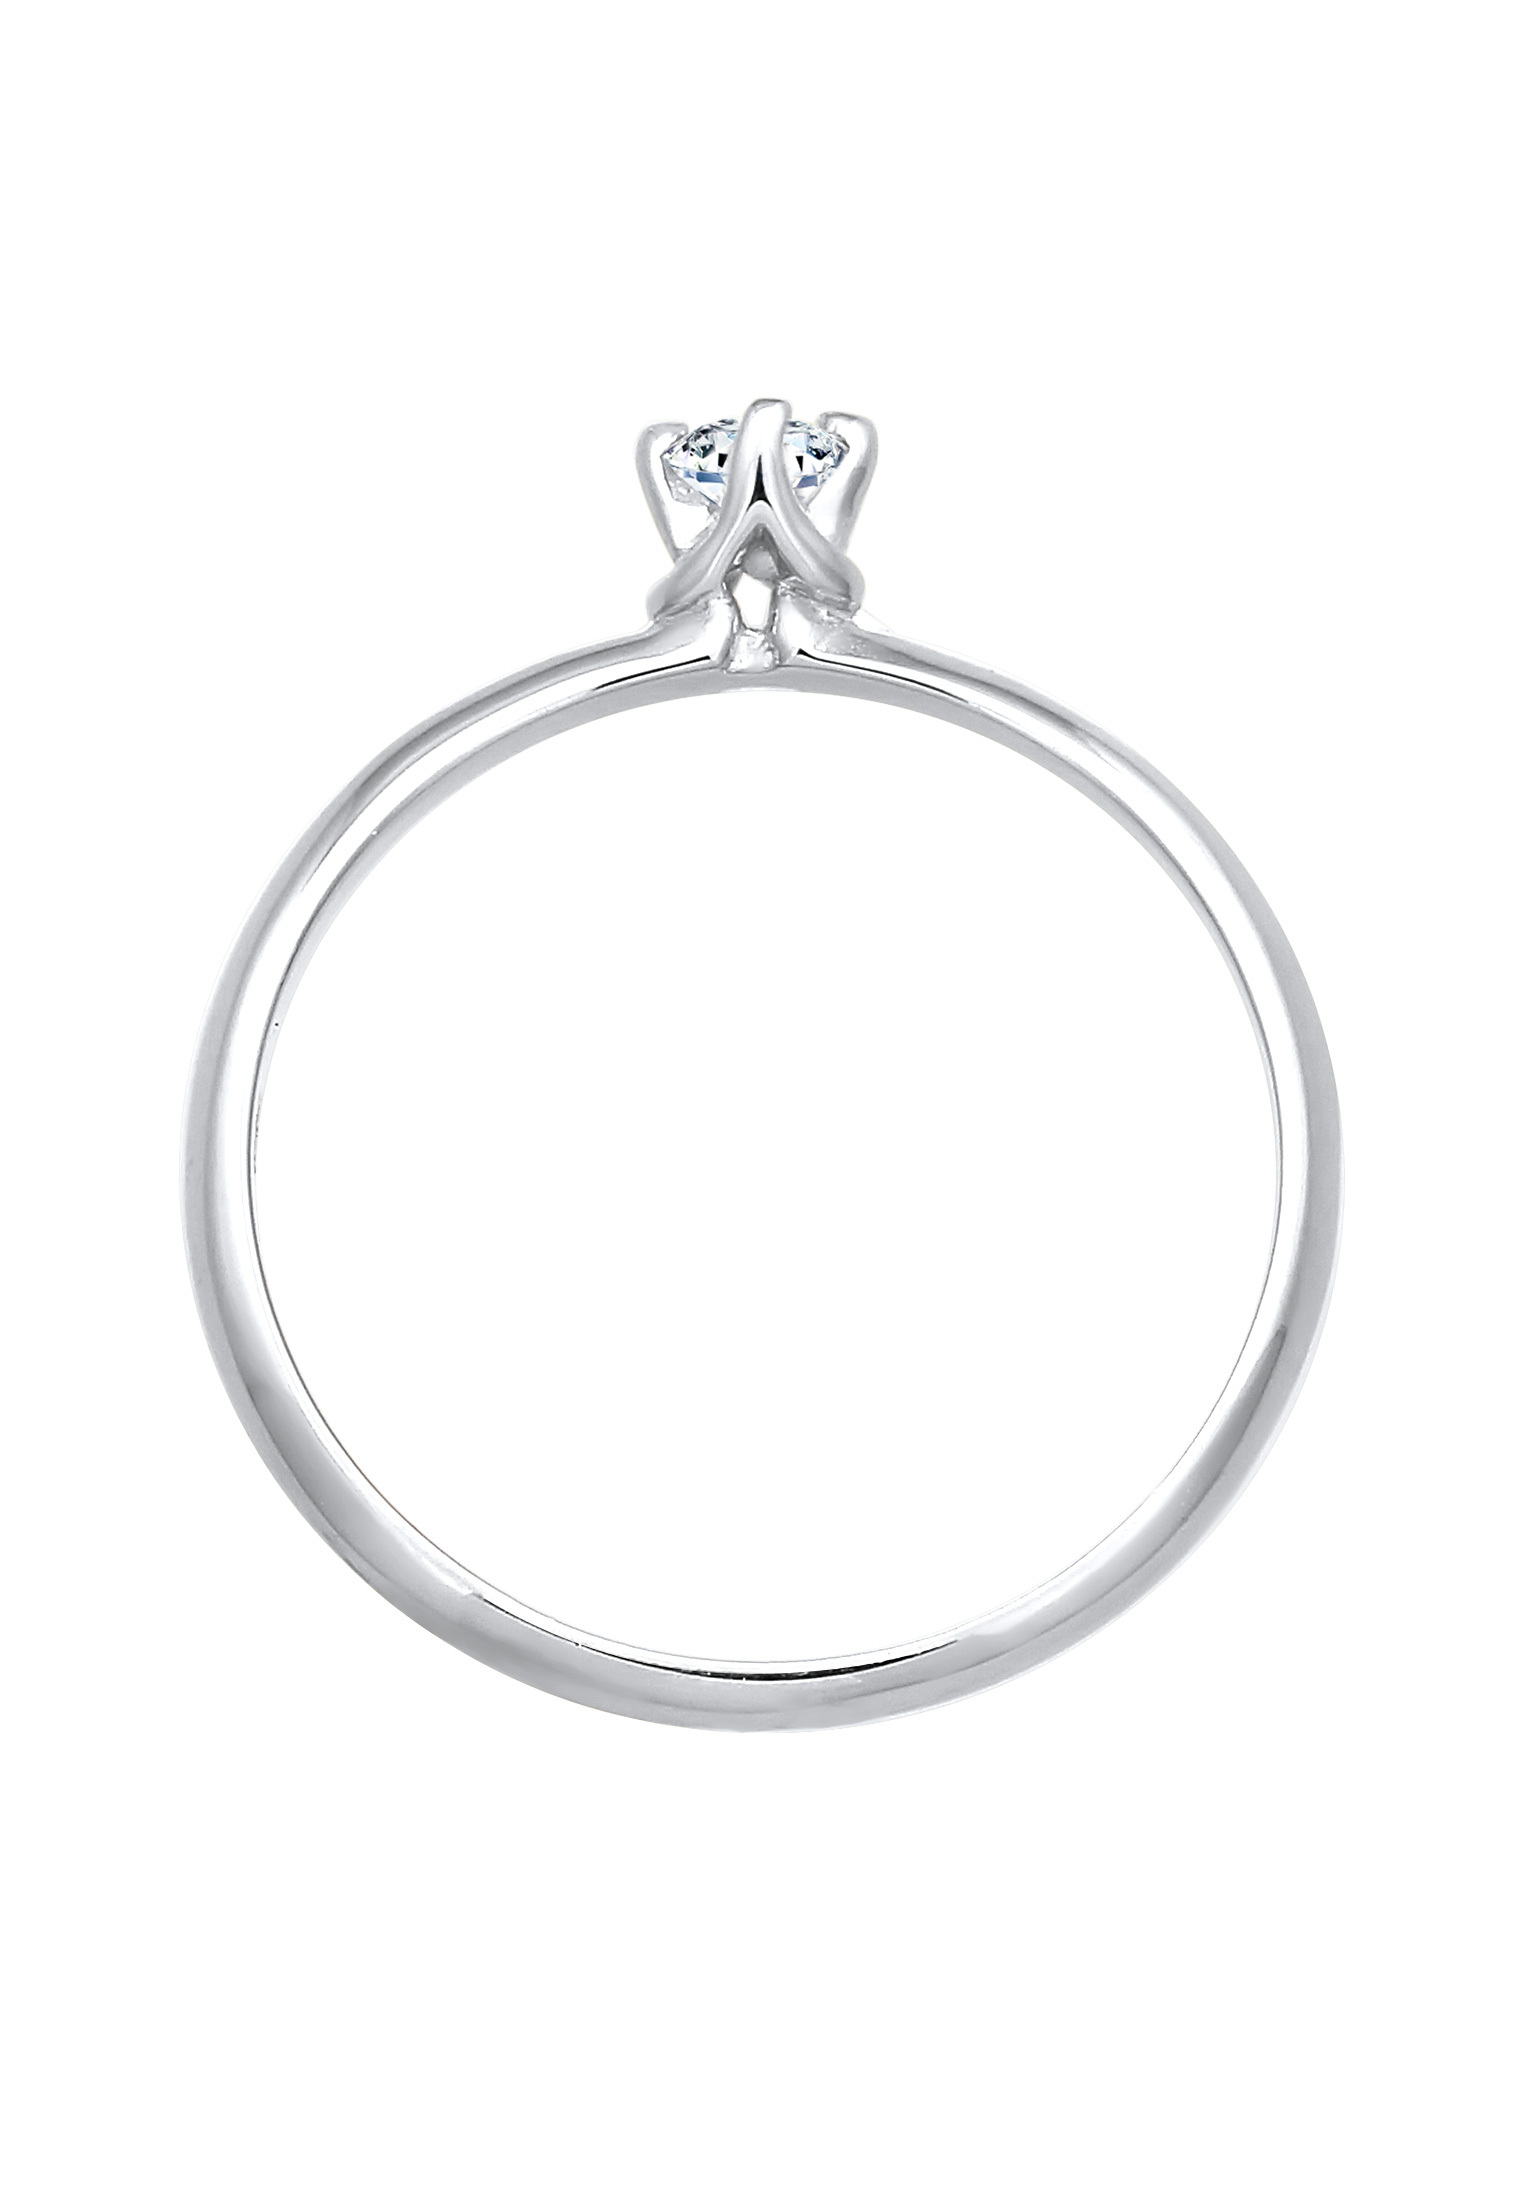 Elli DIAMONDS Ring Edelstein Ring, Verlobungsring in Silber 